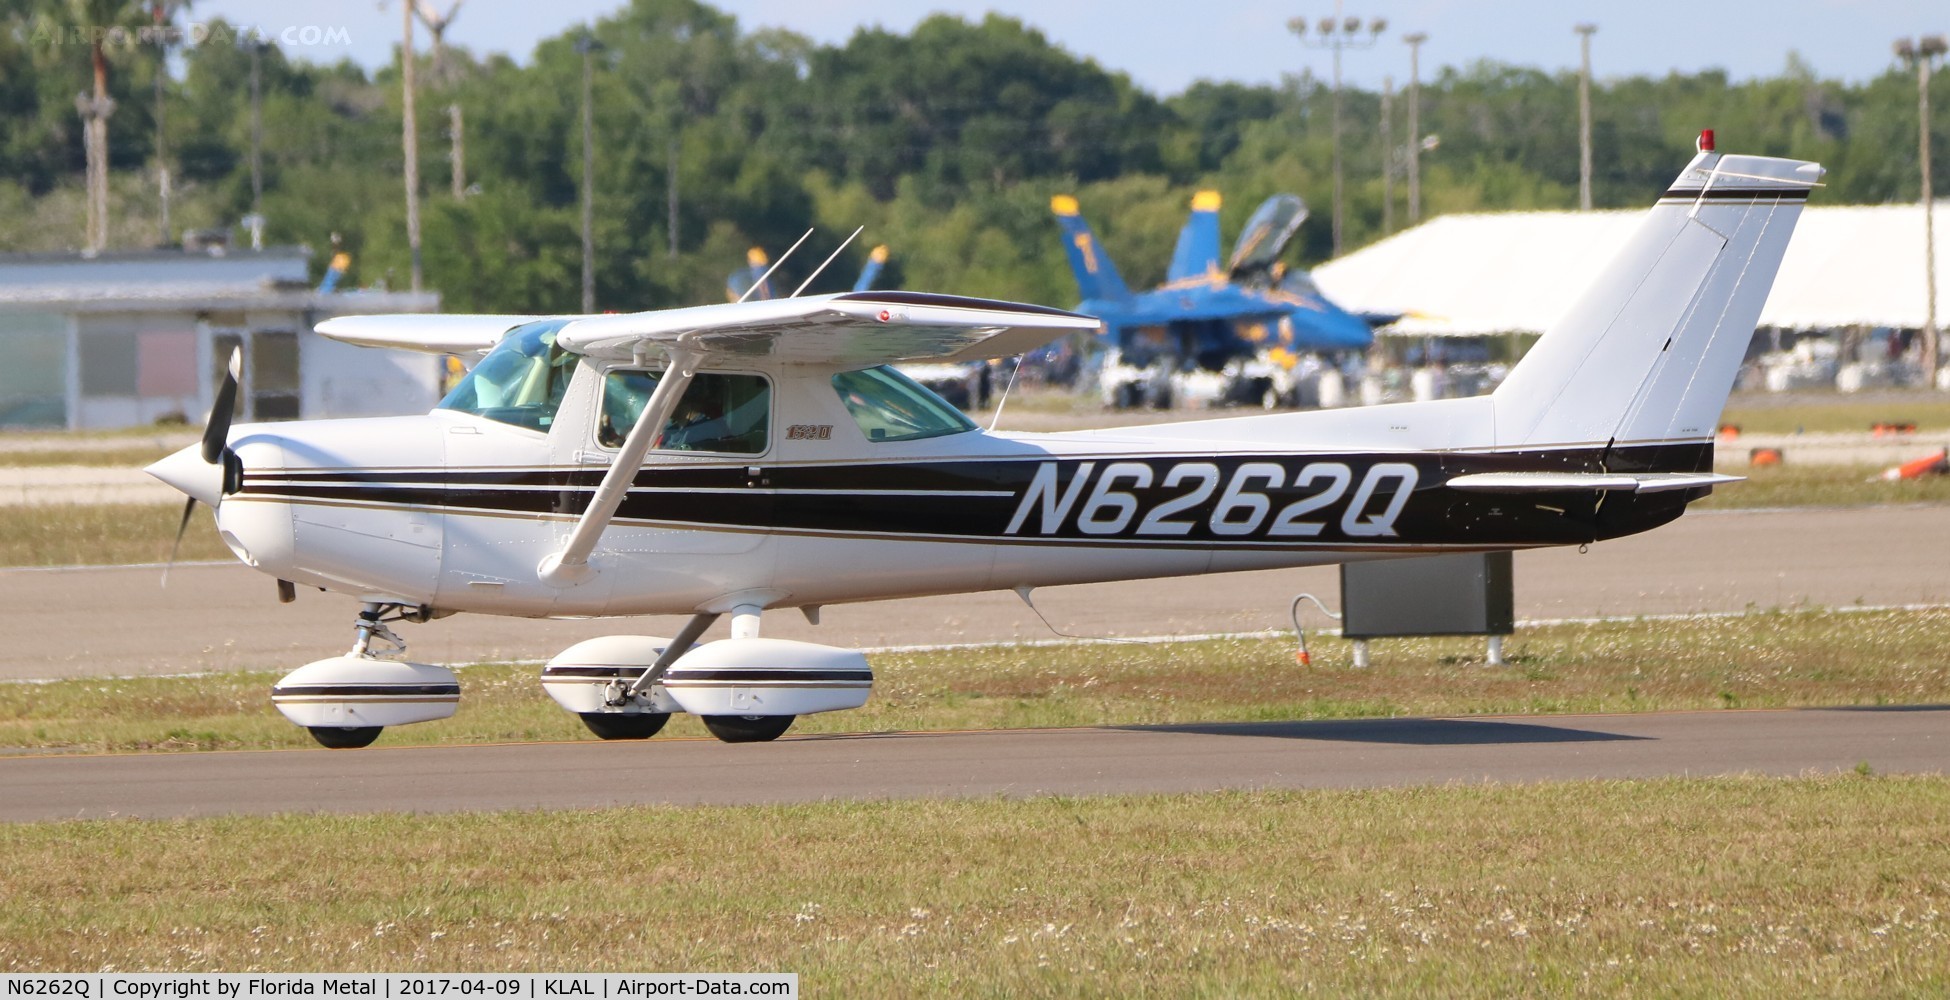 N6262Q, 1981 Cessna 152 C/N 15285213, Cessna 152